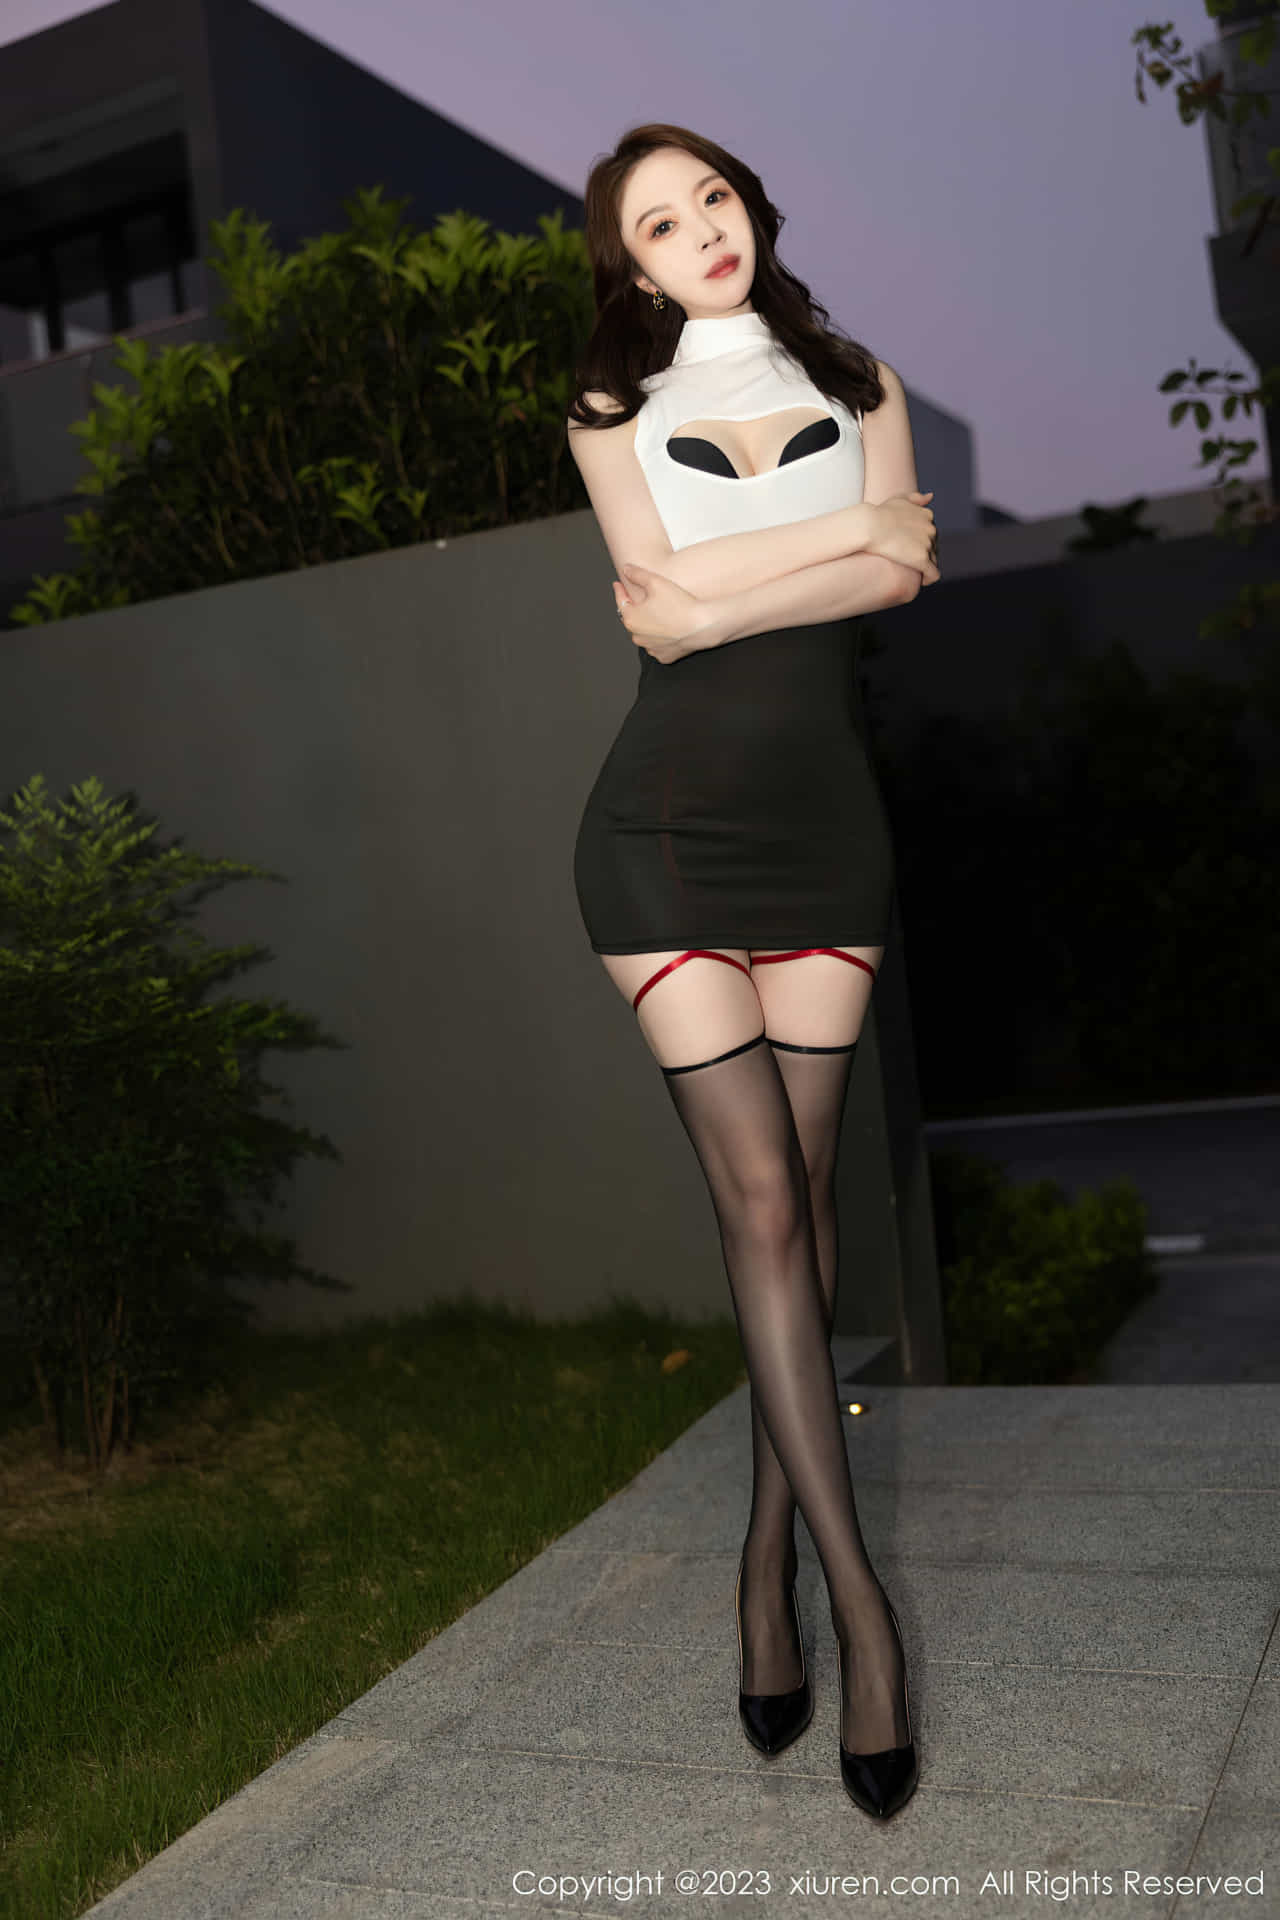 Meng Xinyue のセクシーで魅力的な黒のストッキングは、彼女の背が高く優雅な姿を輪郭を描き、彼女の魅力的な姿勢は優雅で感動的です。